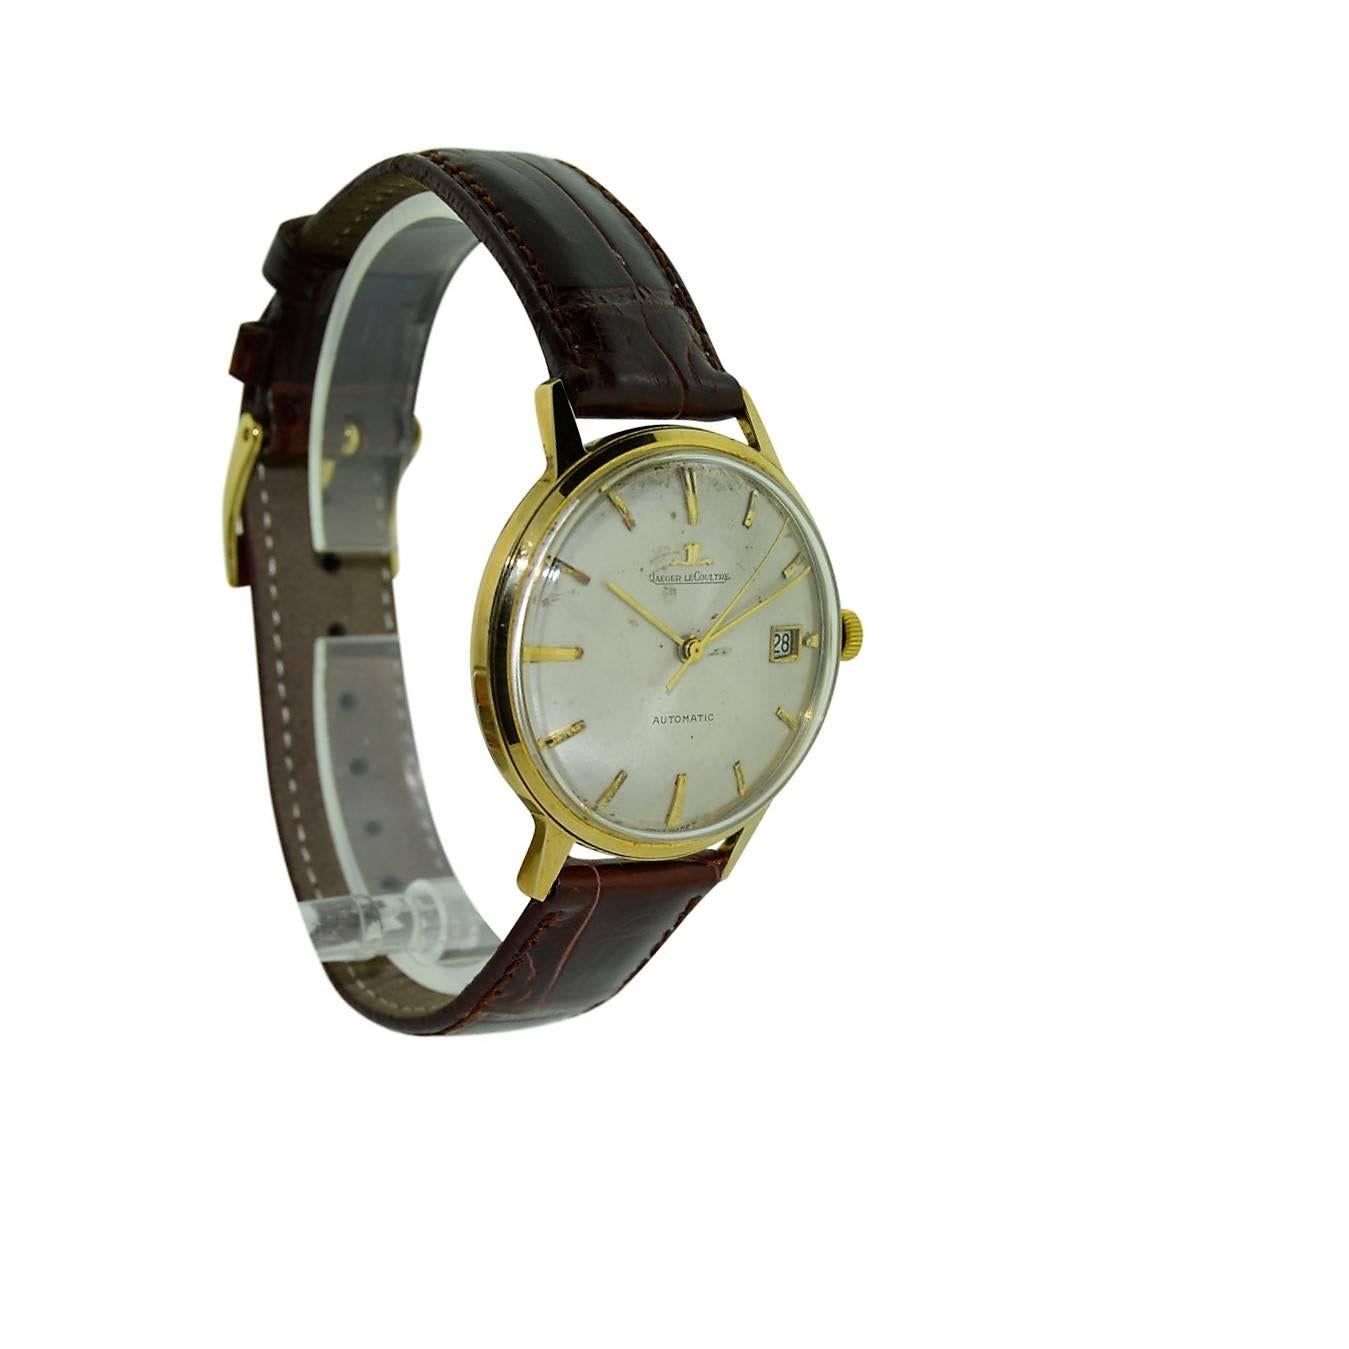 lecoultre watch vintage